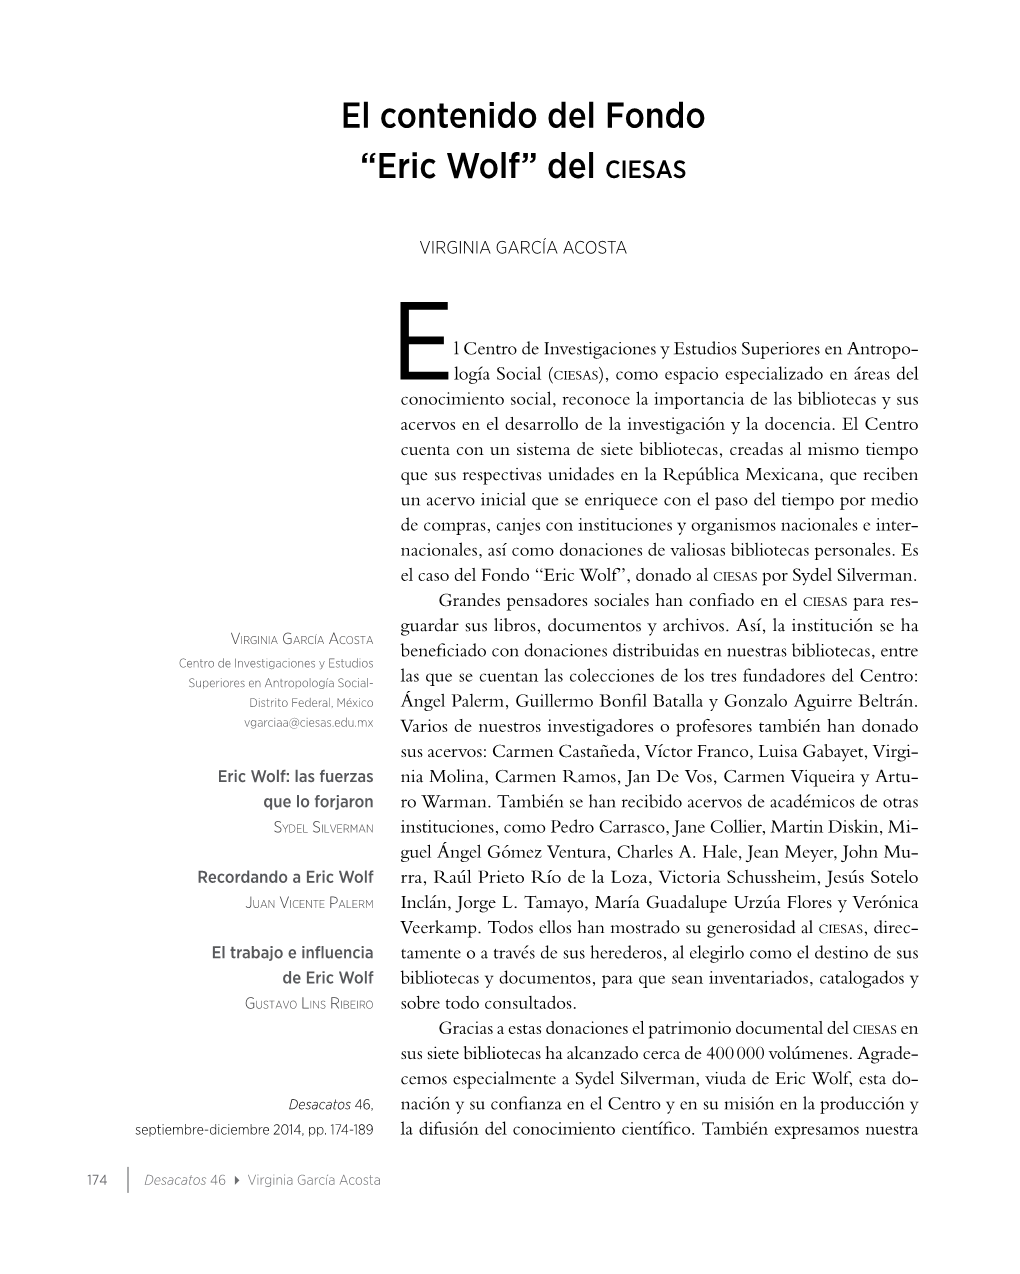 Eric Wolf” Del Ciesas